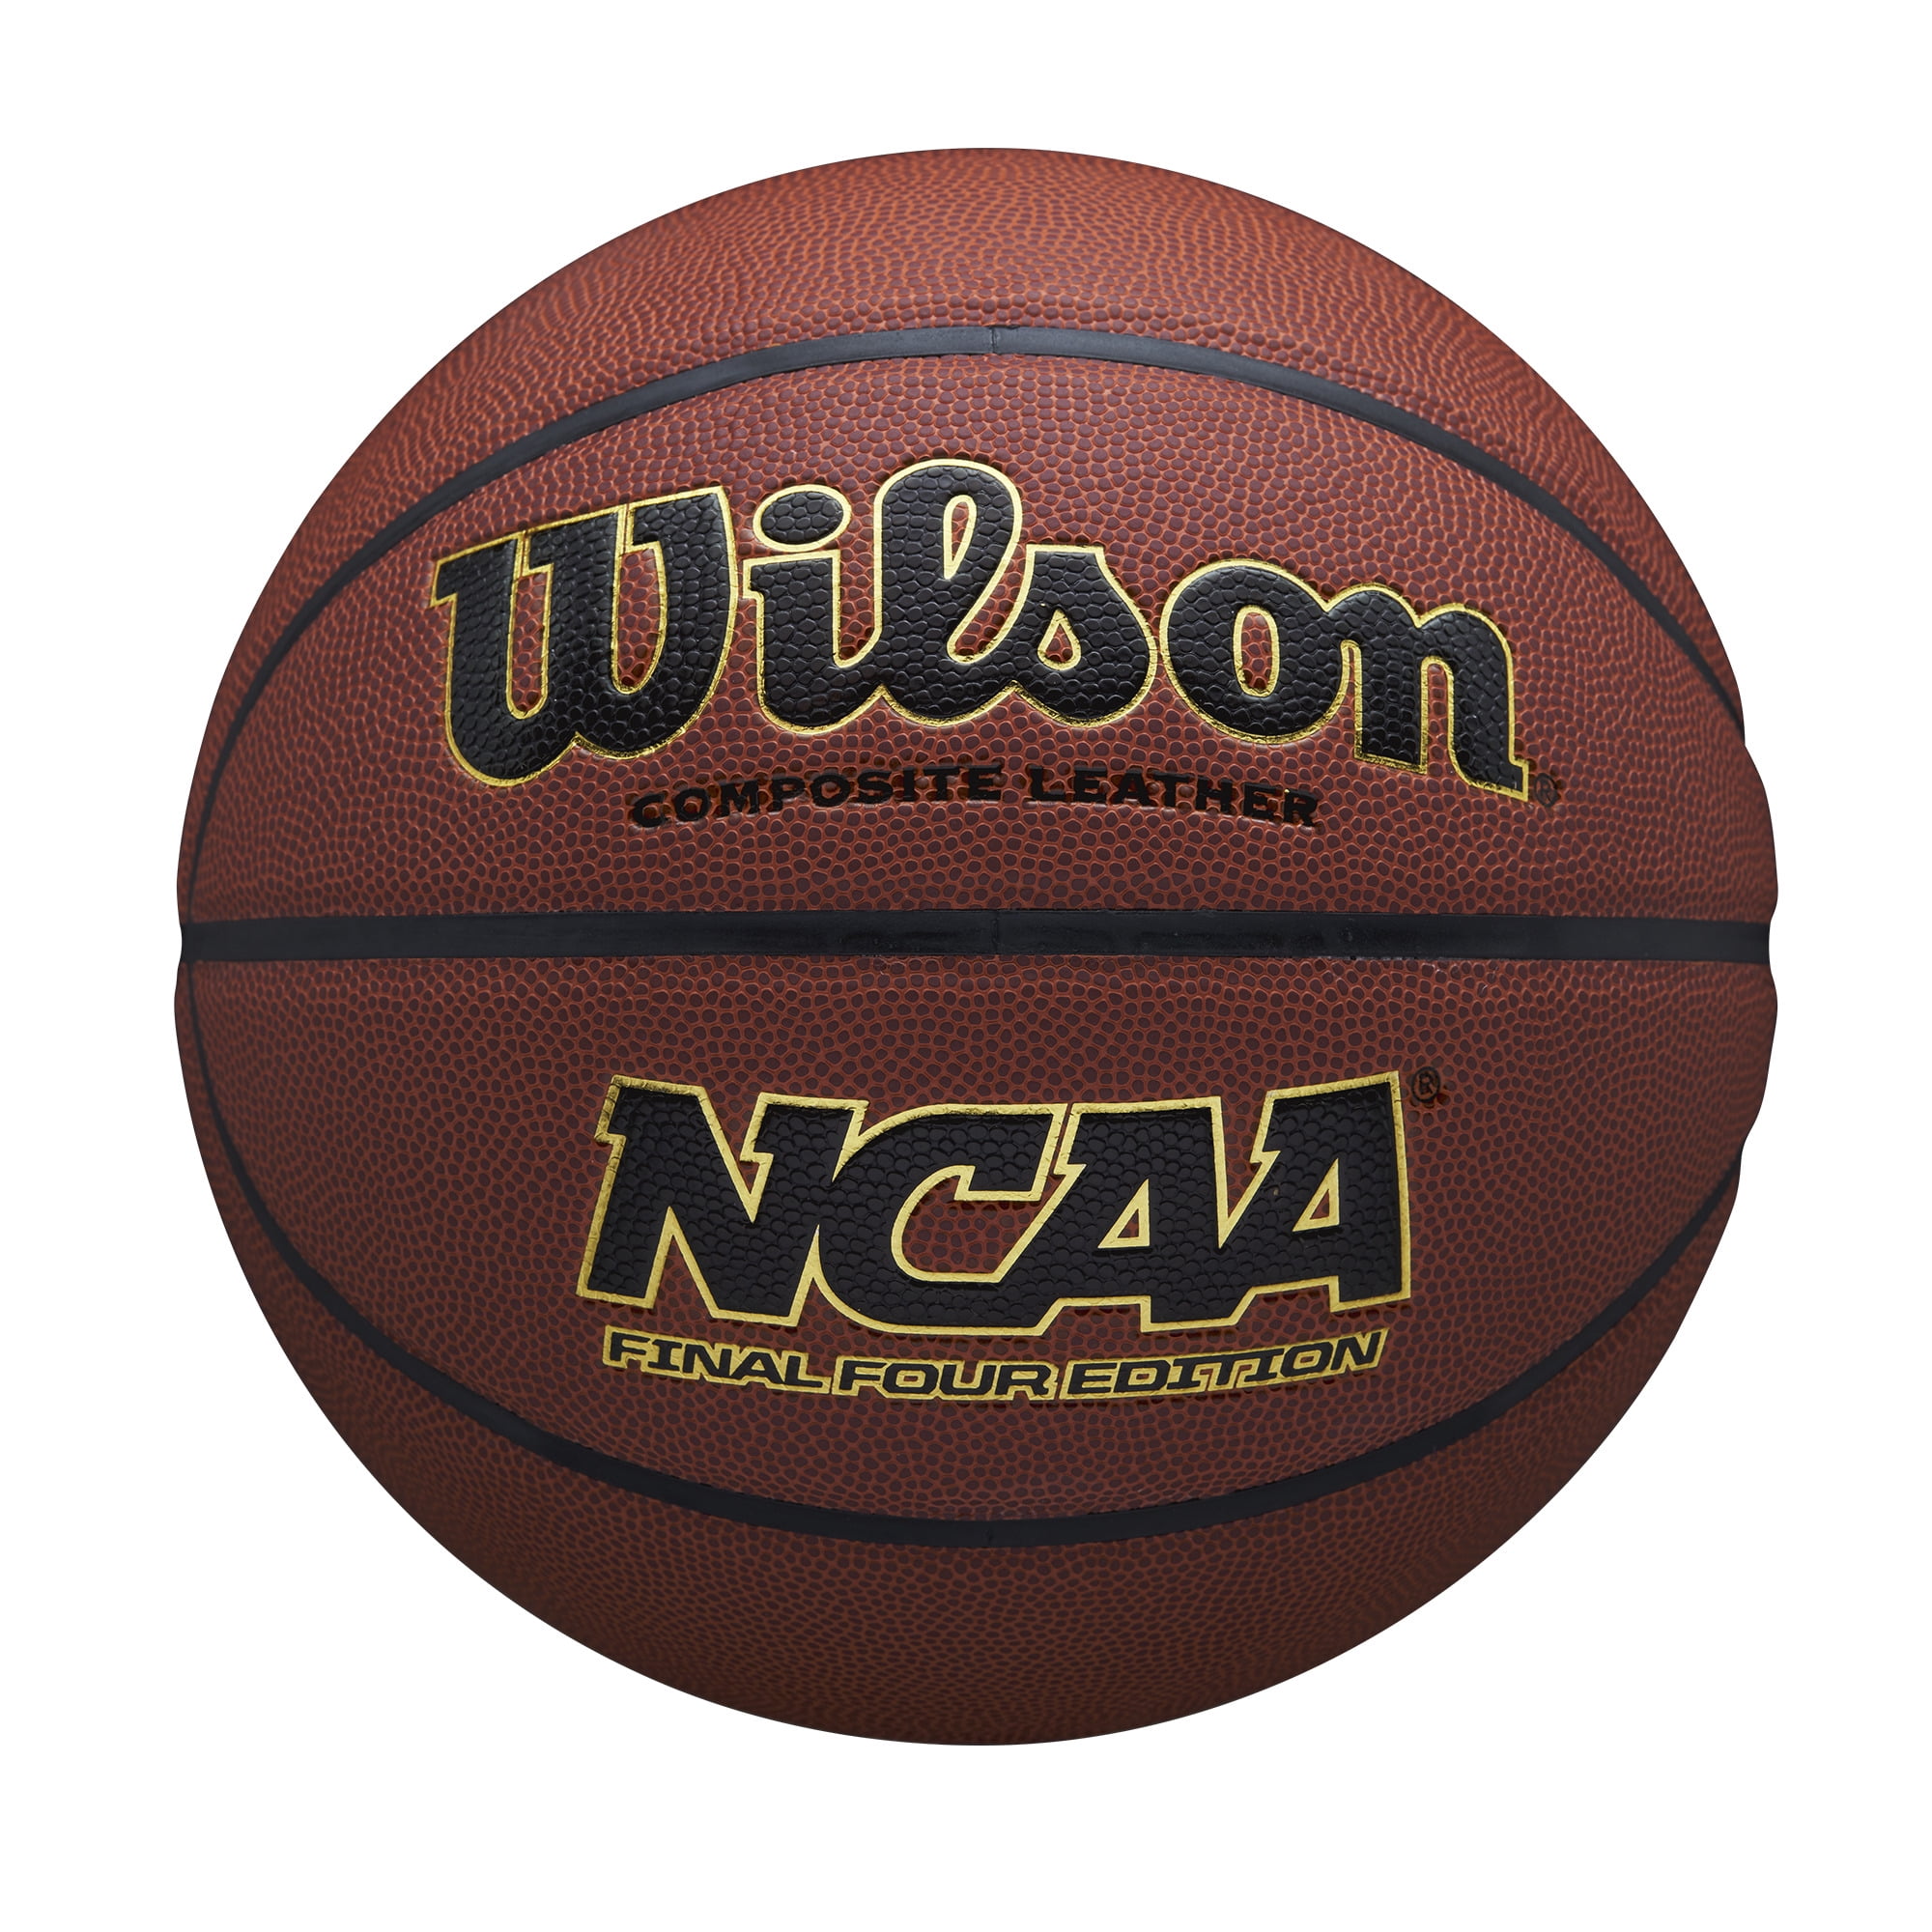 Wilson NCAA Final Four Edition Basketball, Official Size 29.5